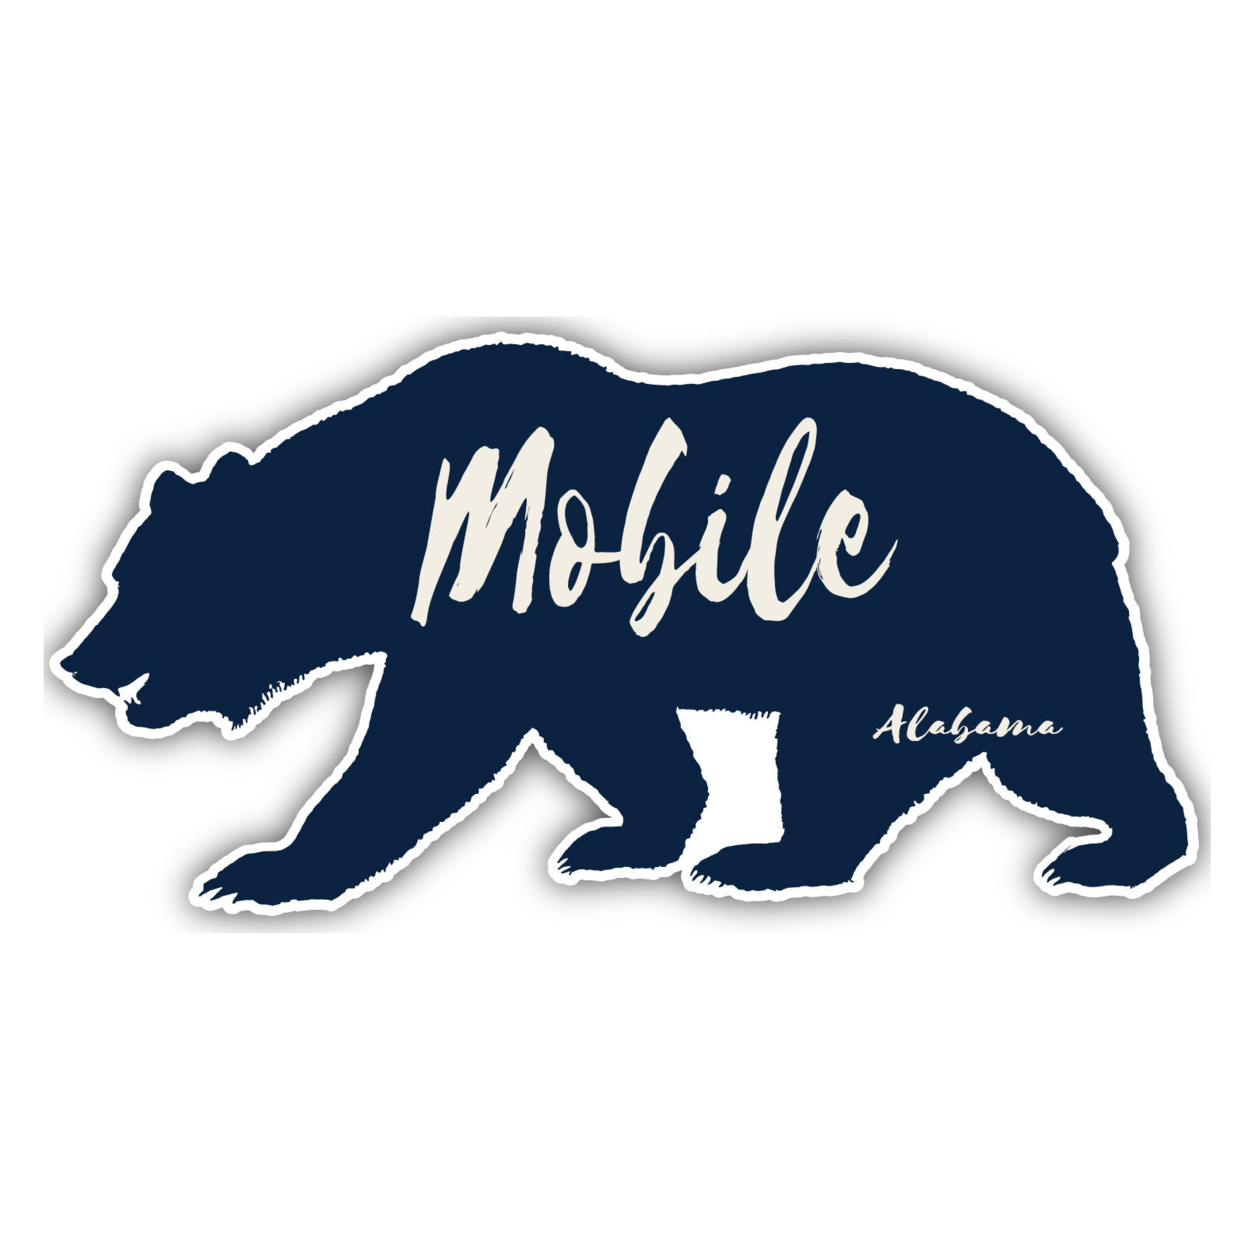 Mobile Alabama Souvenir Decorative Stickers (Choose Theme And Size) - 2-Inch, Bear